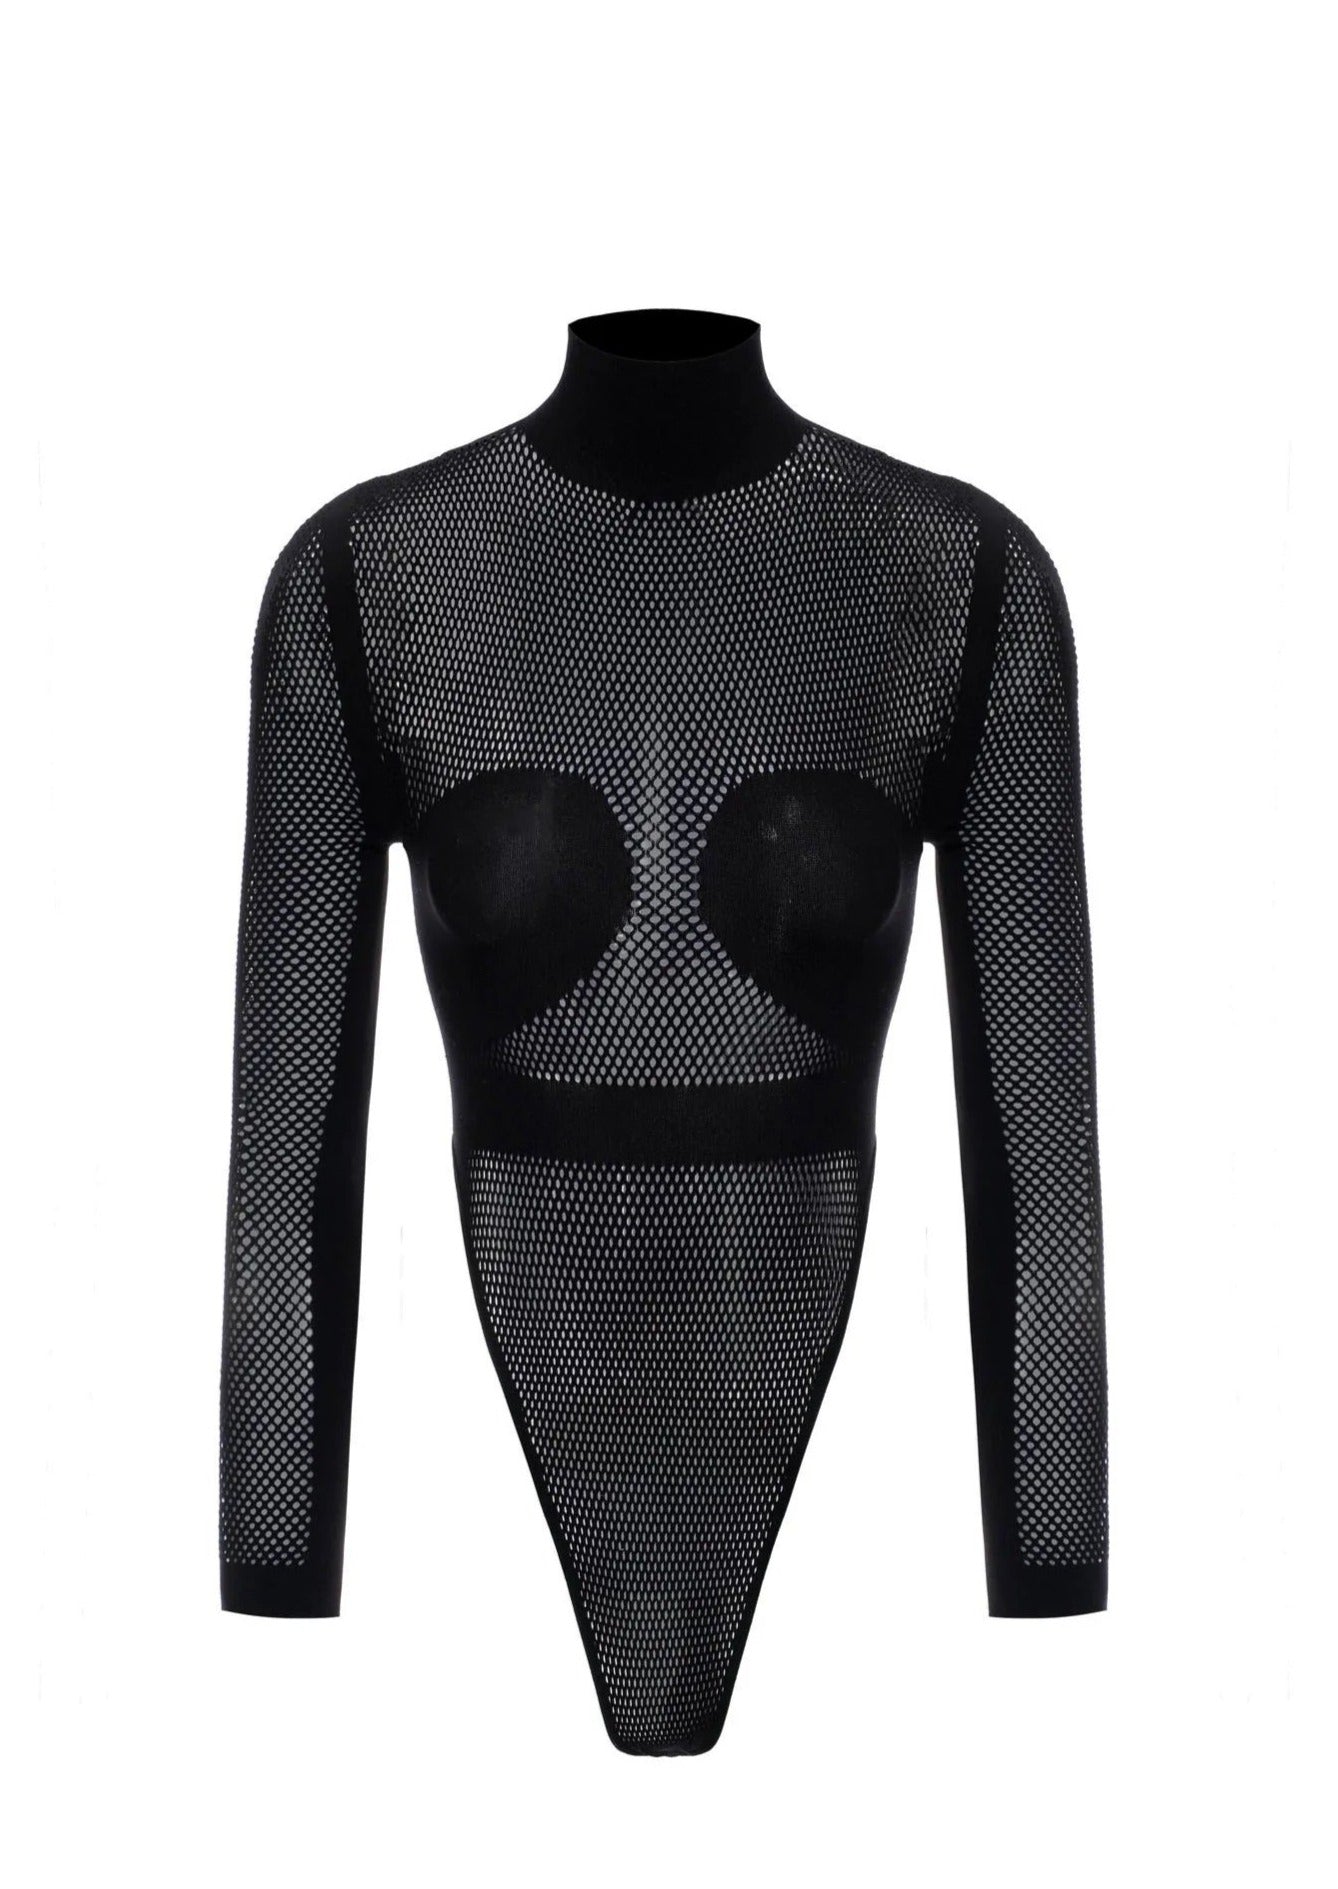 Kalena Scoop Neck Cutout Bodysuit In Black